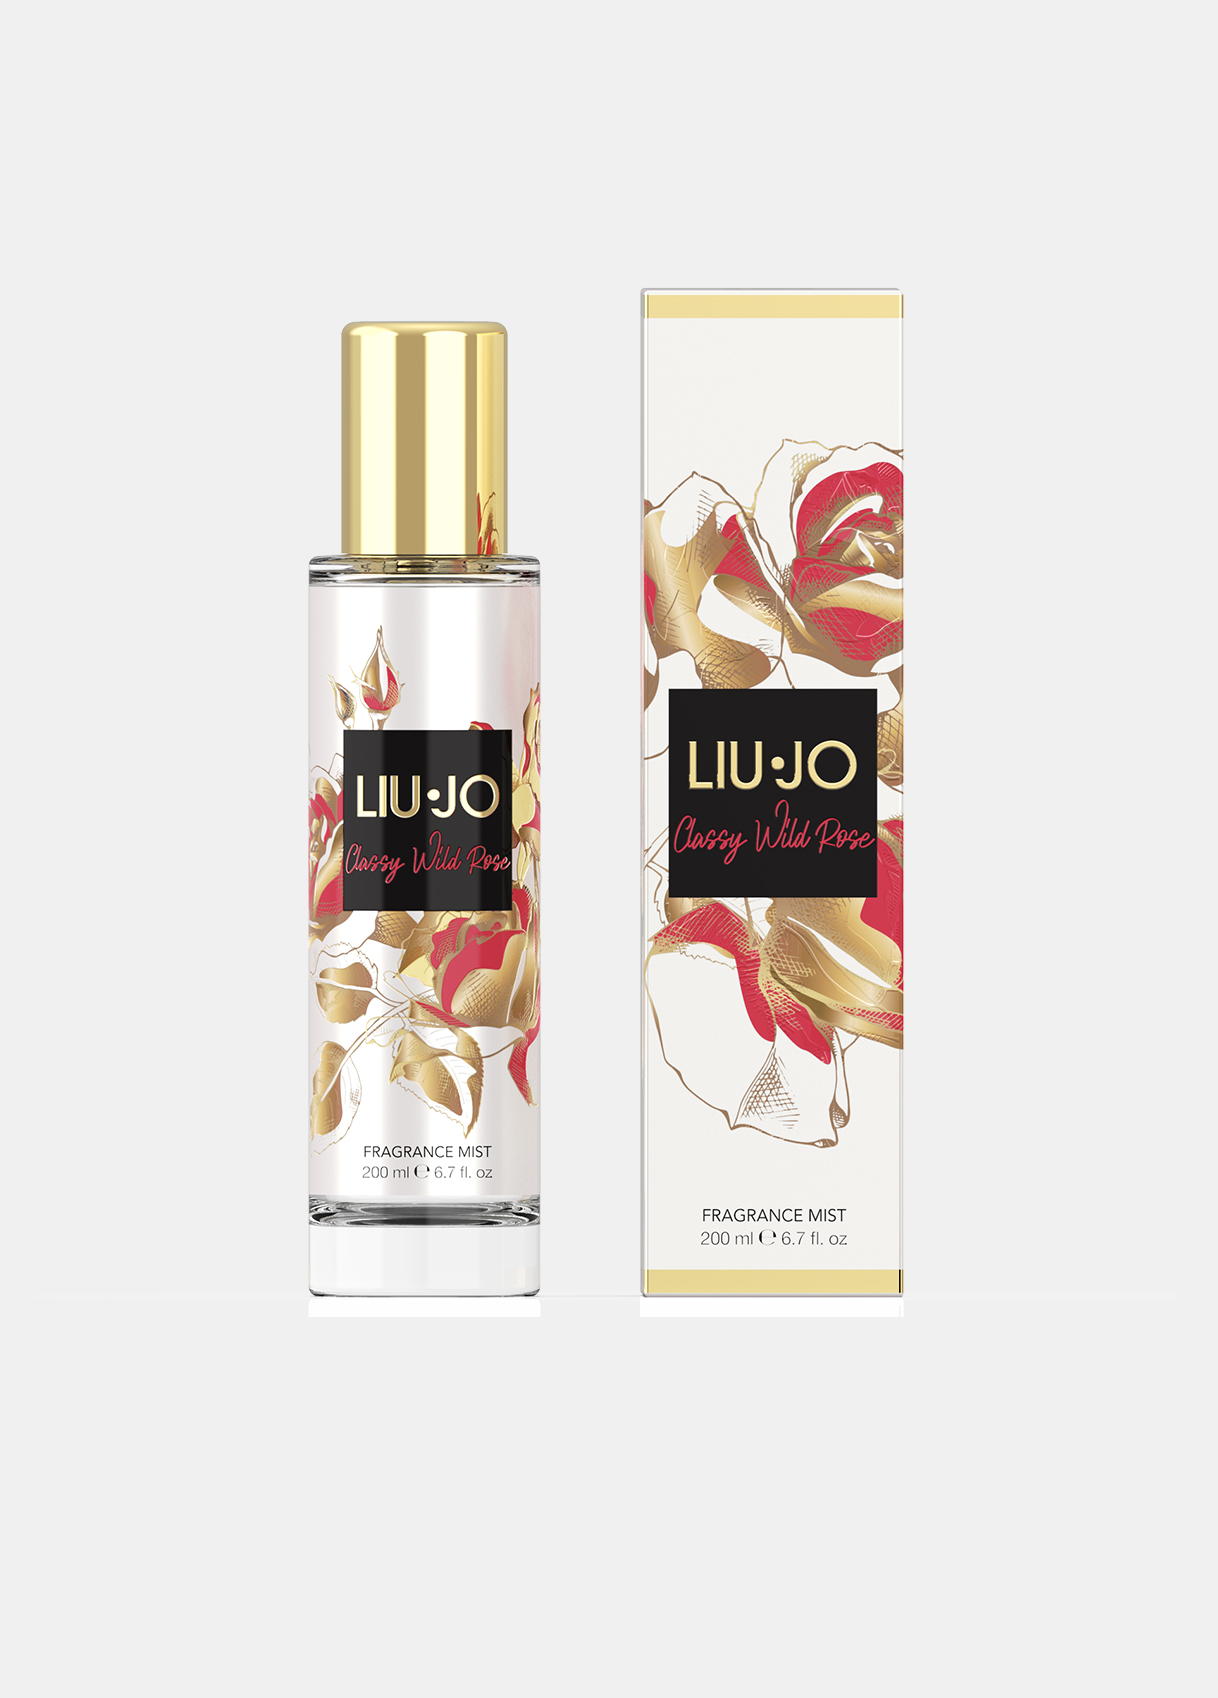 Classy Wild Rose - Fragrance mist 200 ml